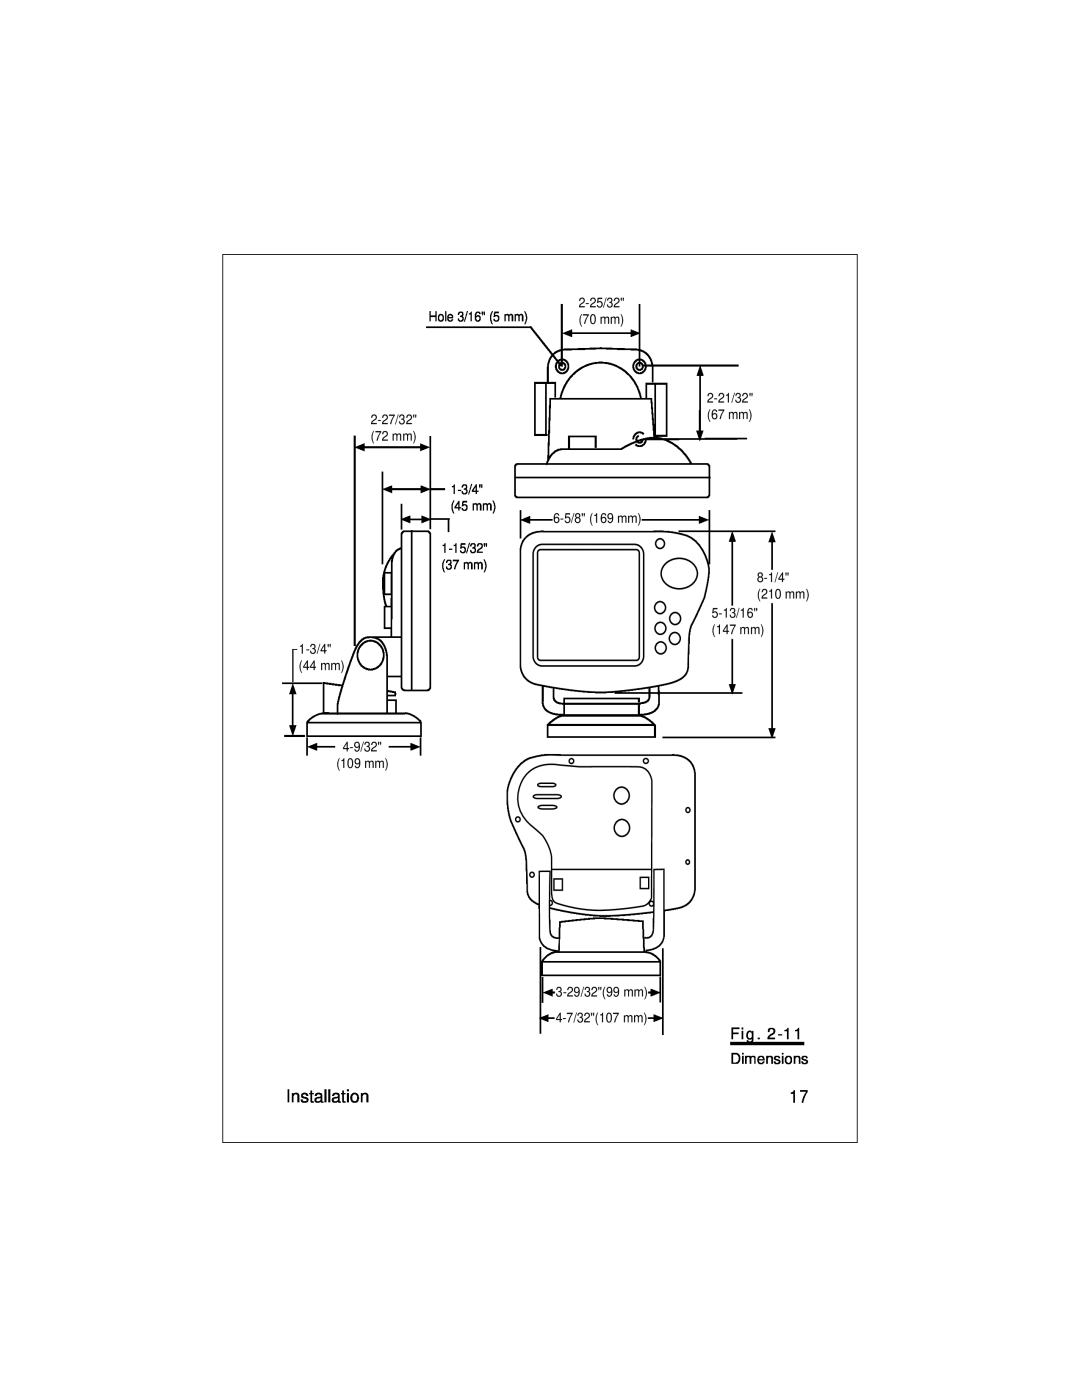 Raymarine L470 instruction manual Installation, Dimensions, 2-25/32, 70 mm, 210 mm, 3-29/3299 mm, 4-7/32107 mm 